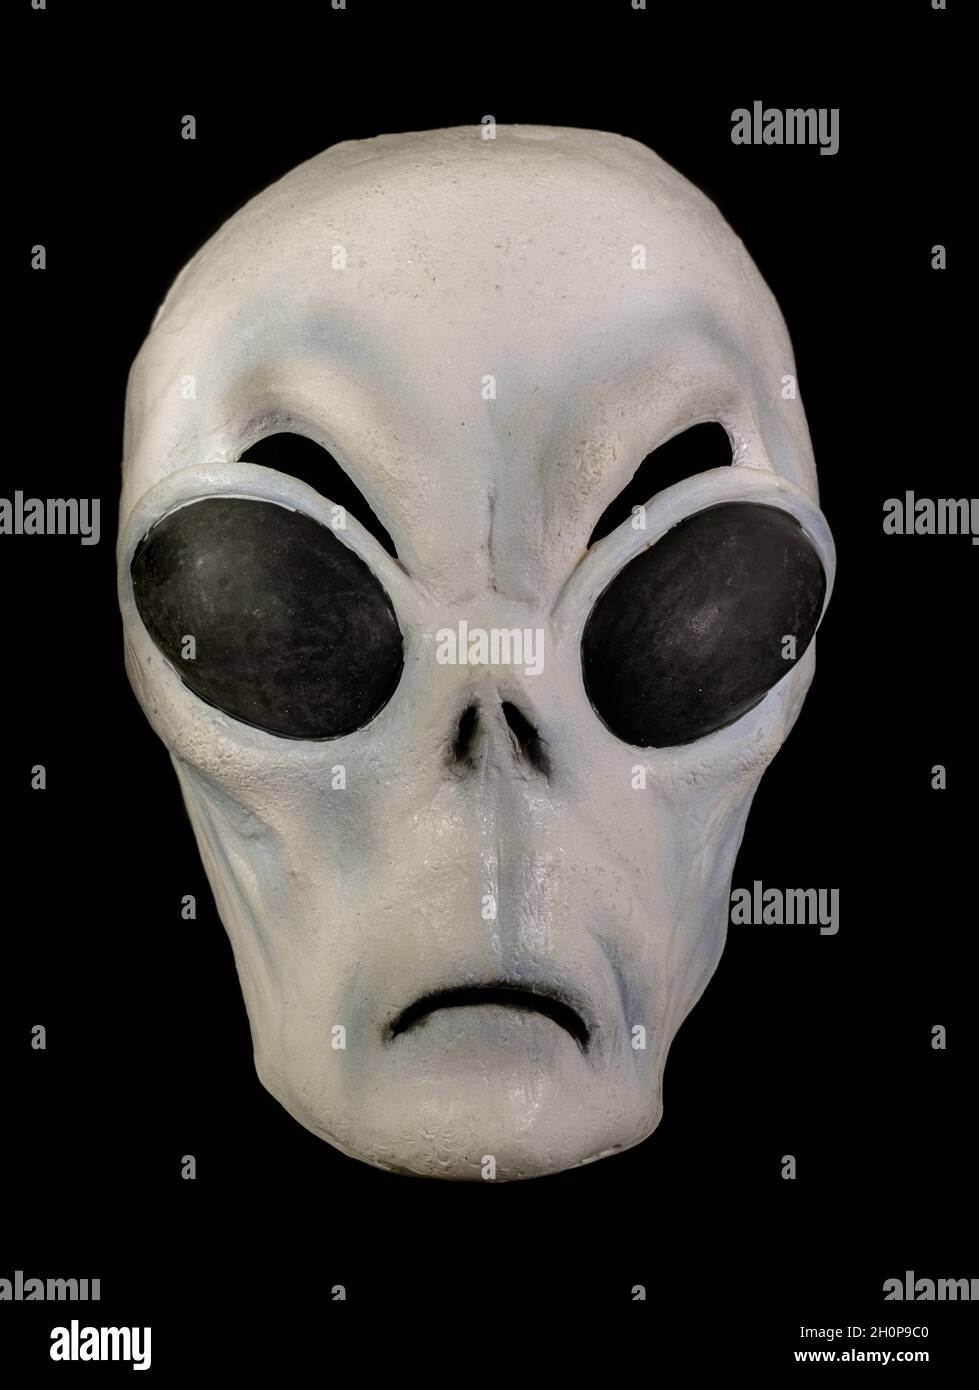 Alien Mask with Bulging Eyes Isolated Against Black Background Stock Photo